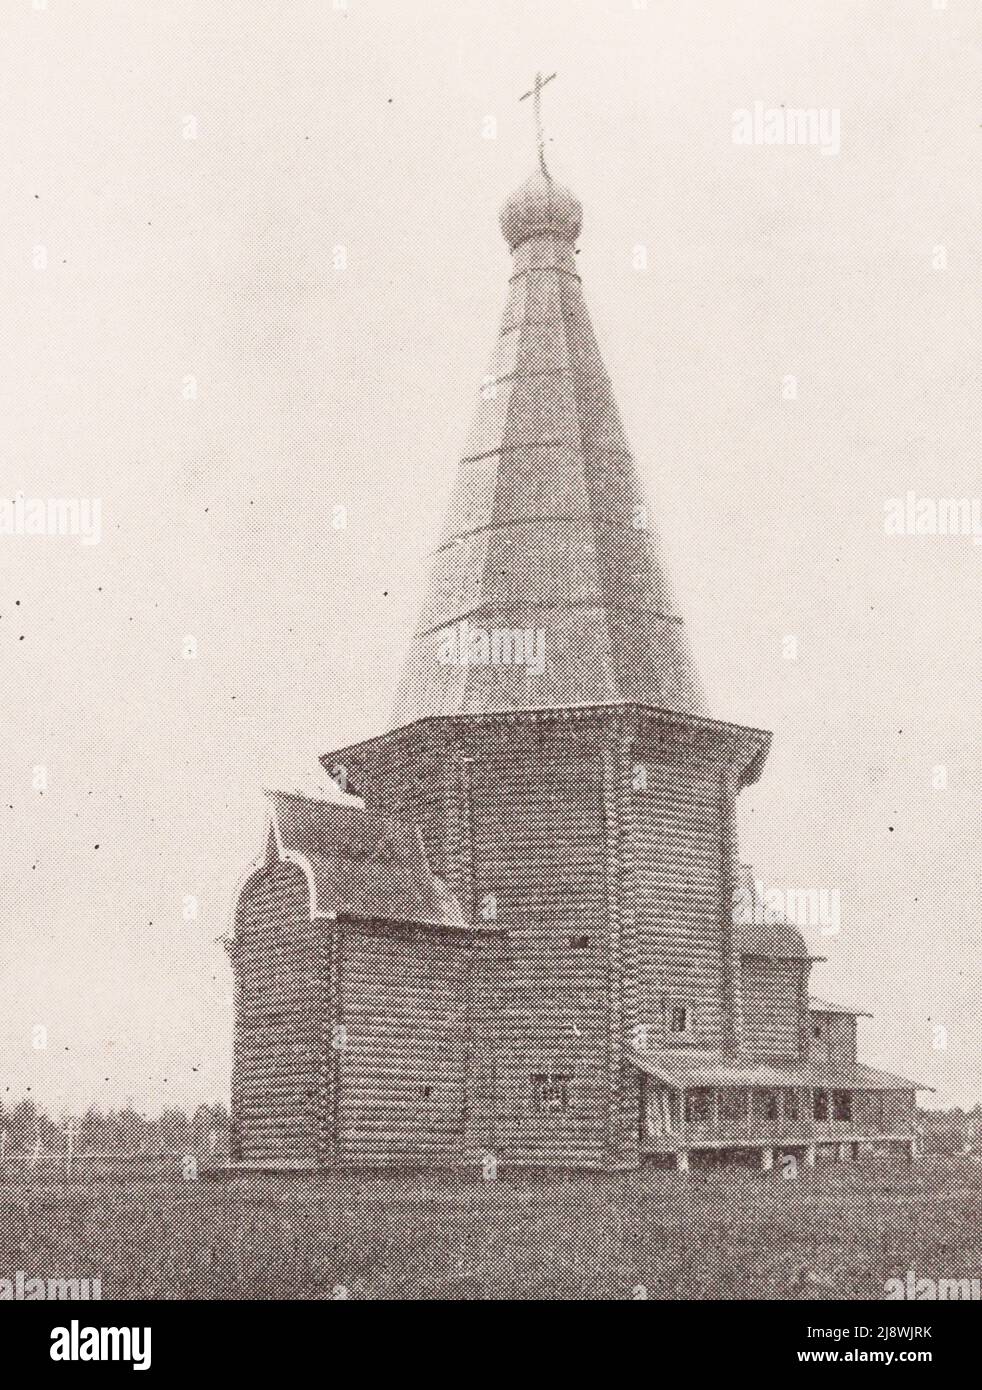 Vladimirskaya church in the village of Belaya Sluda in the Arkhangelsk region. Photo from the end of the 19th century. Stock Photo